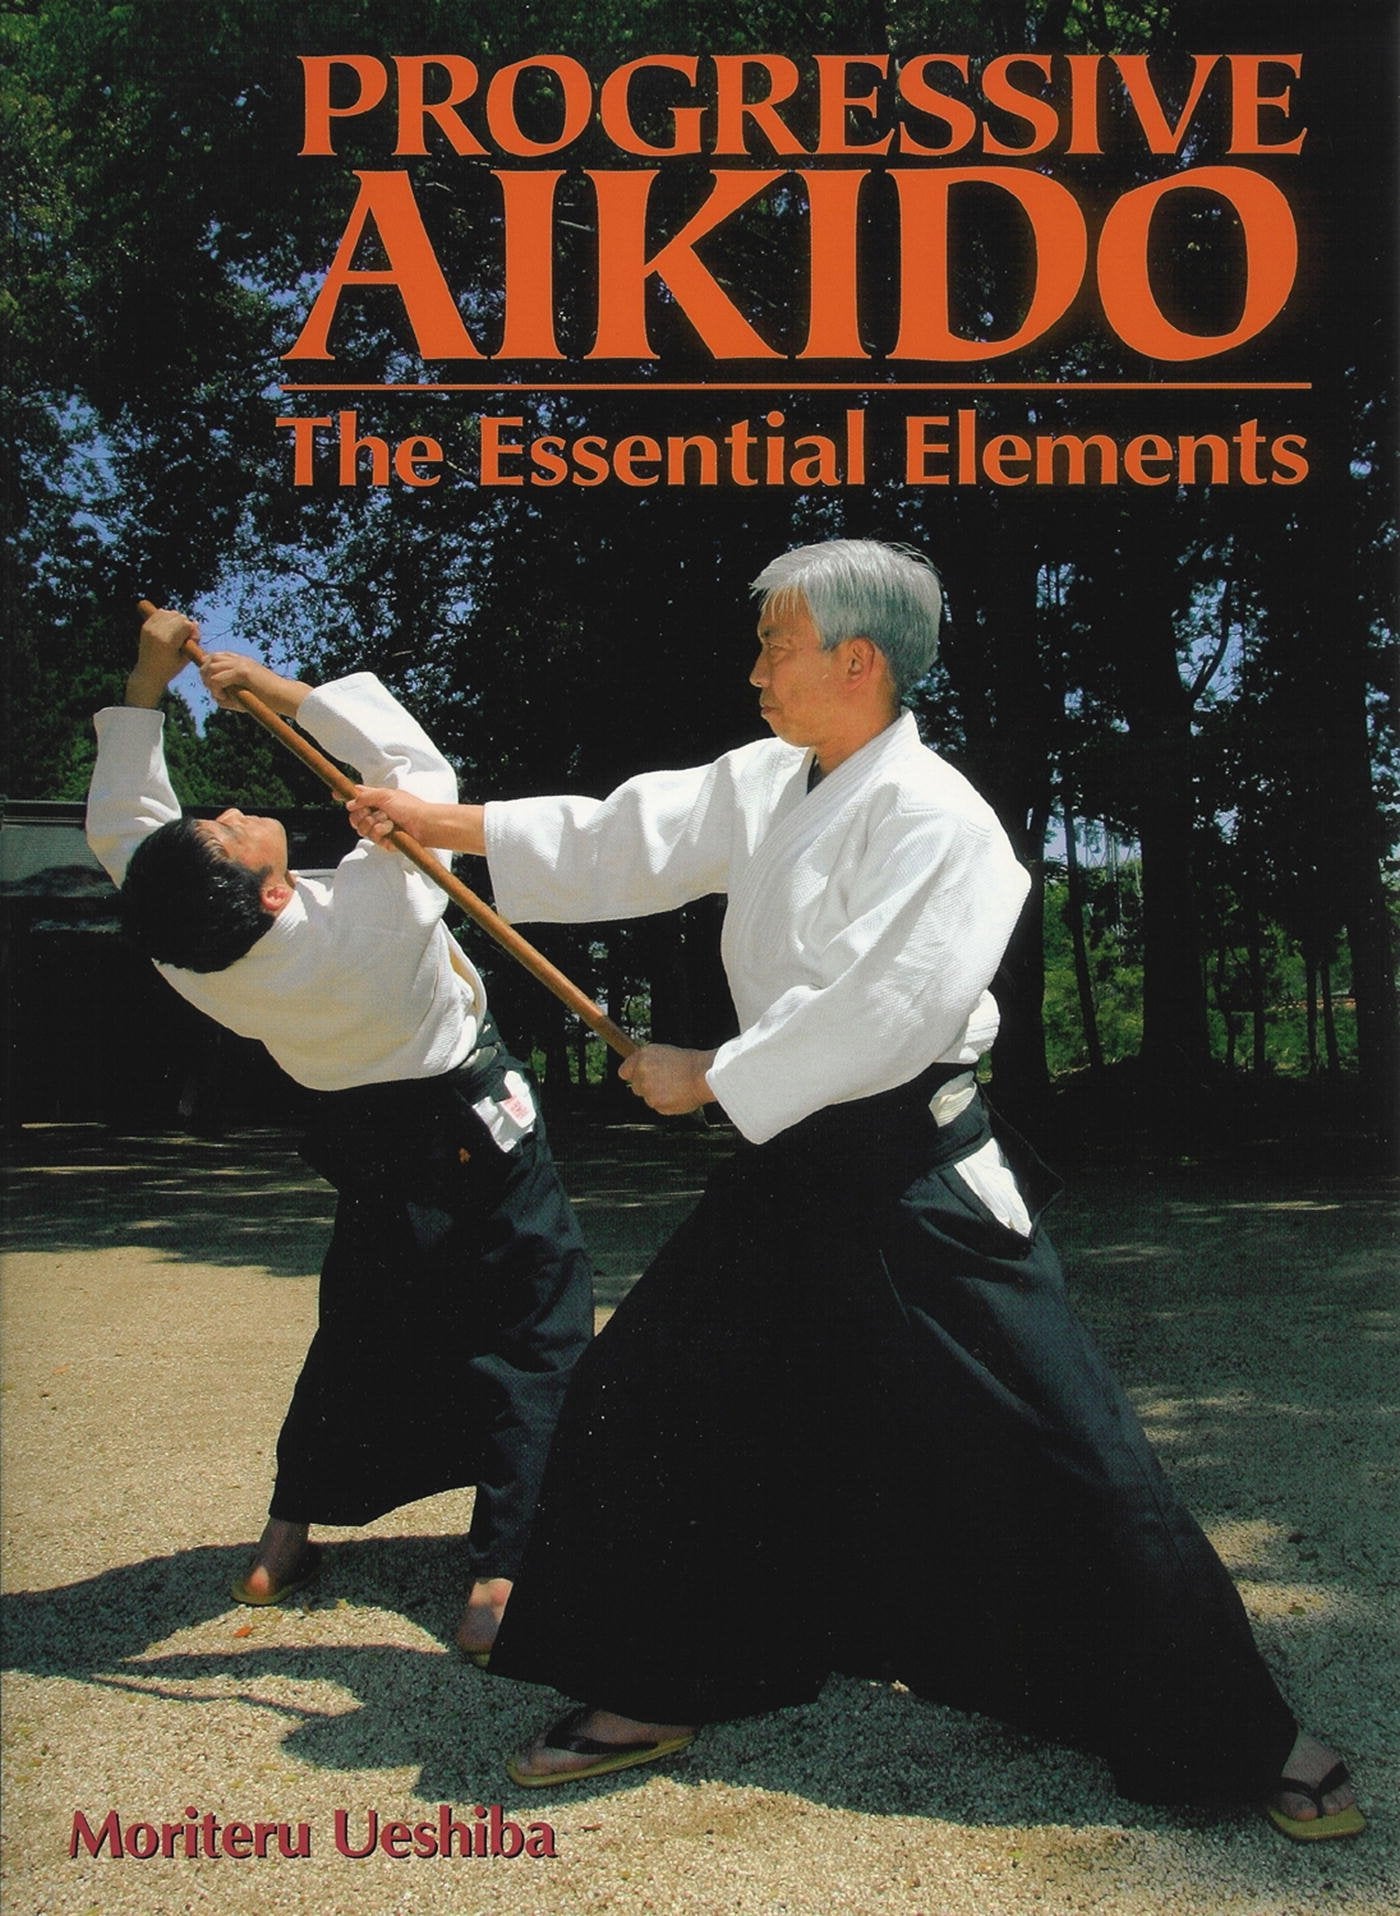 Progressive Aikido: The Essential Elements Book by Moriteru Ueshiba (Preowned) - Budovideos